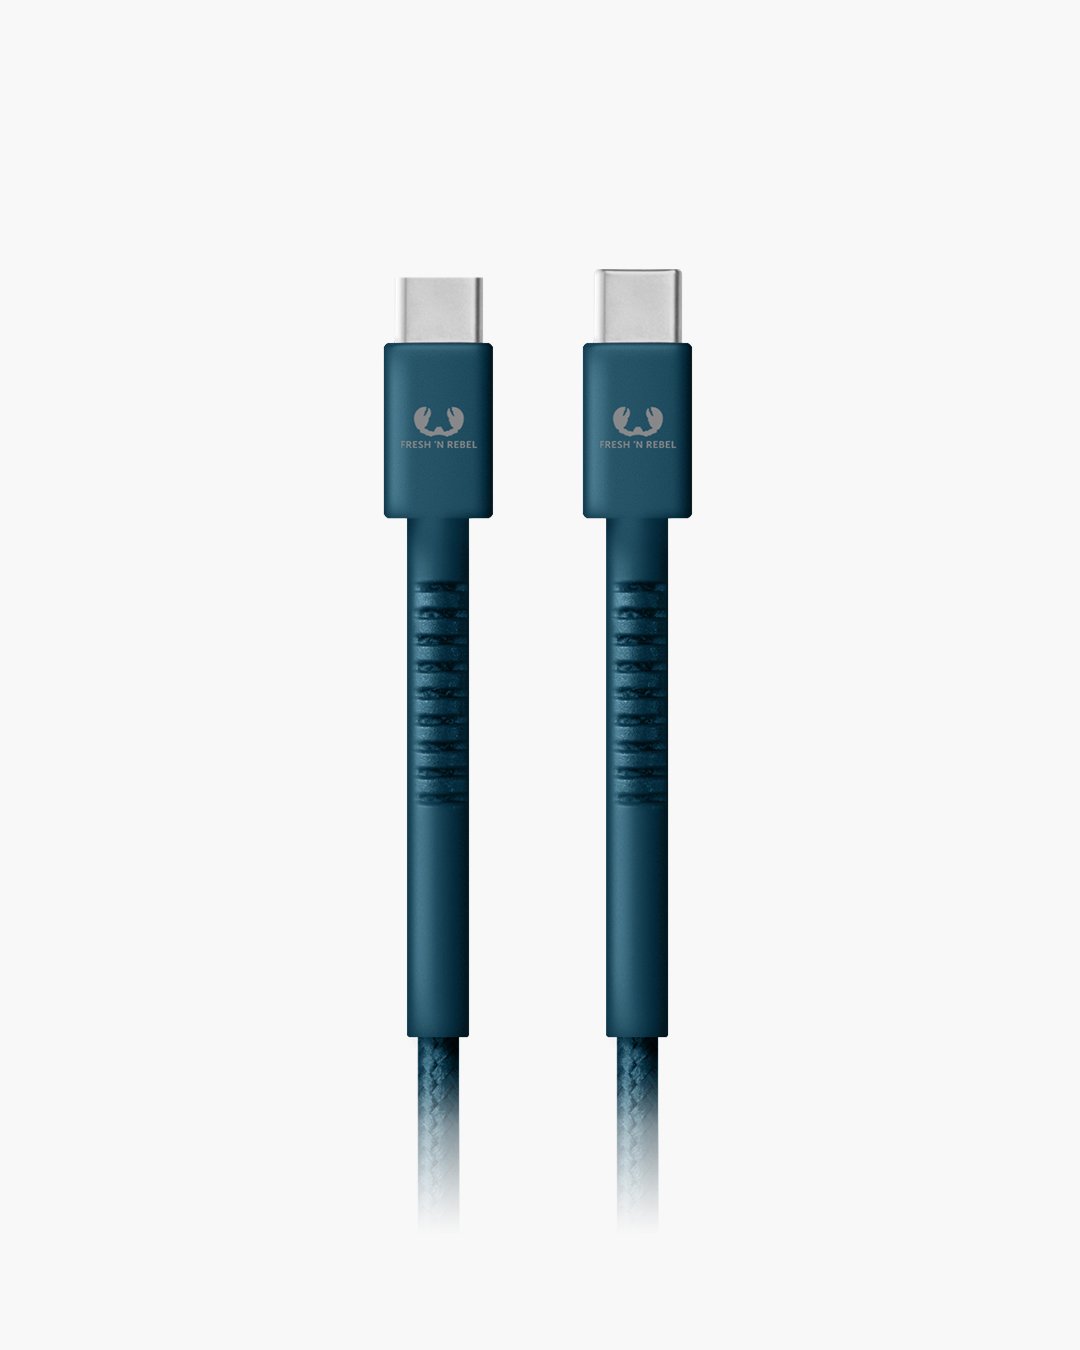 USB-C to USB-C